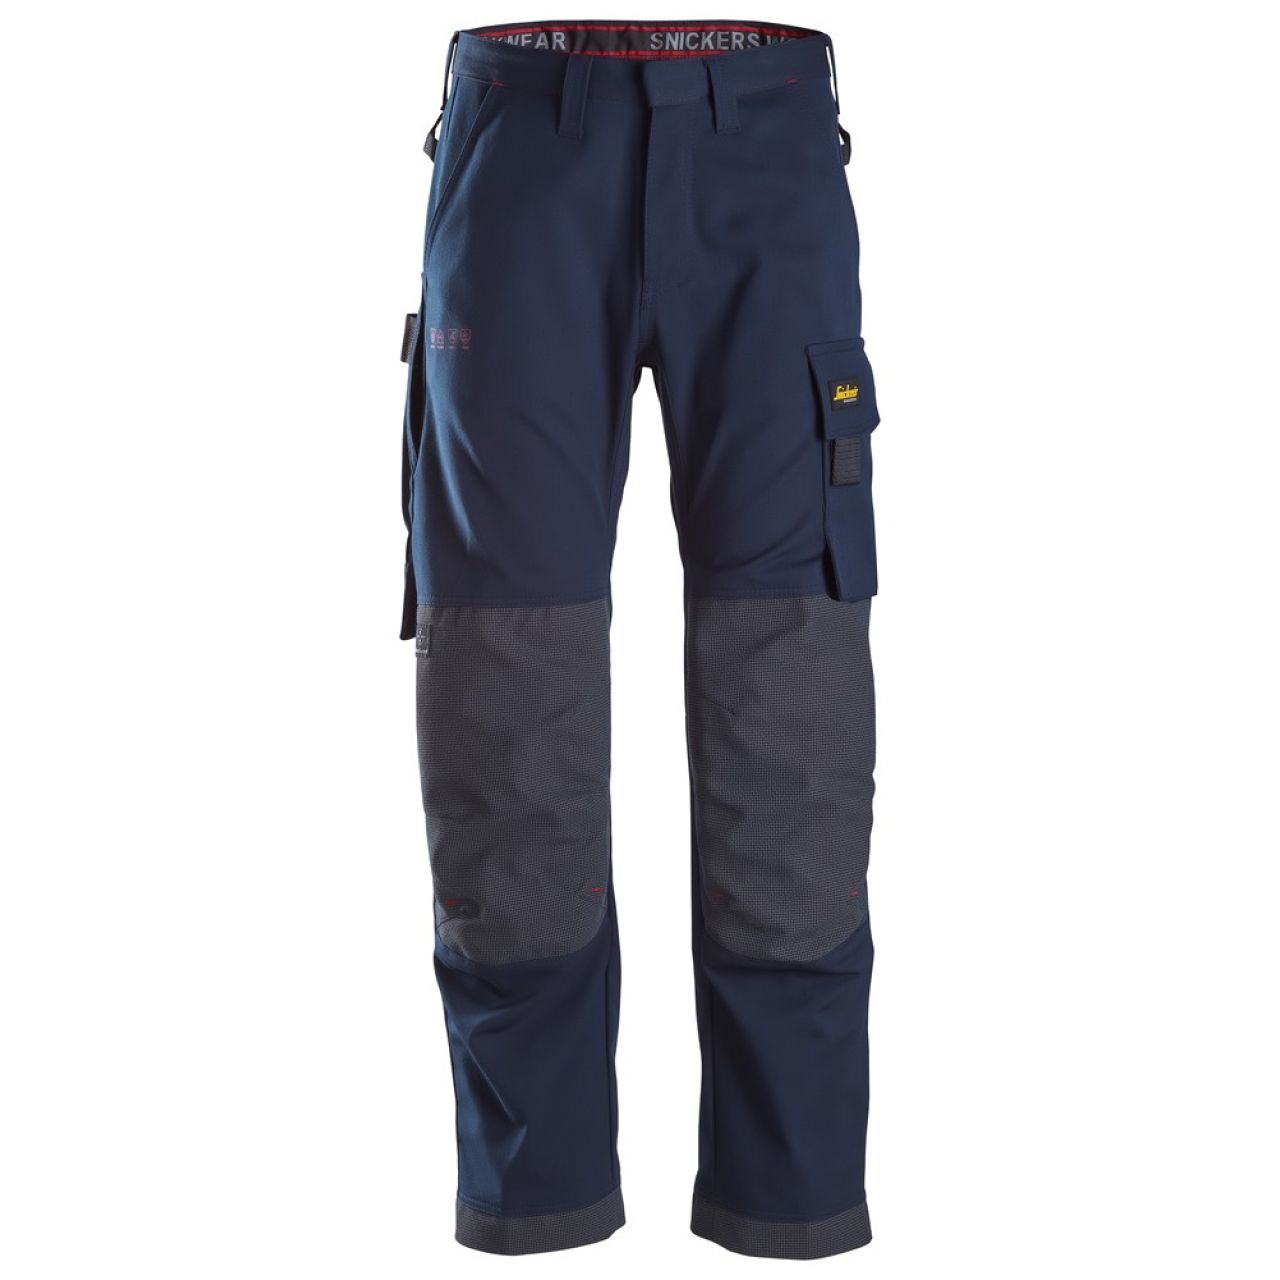 6386 Pantalones largos de trabajo ProtecWork azul marino talla 64